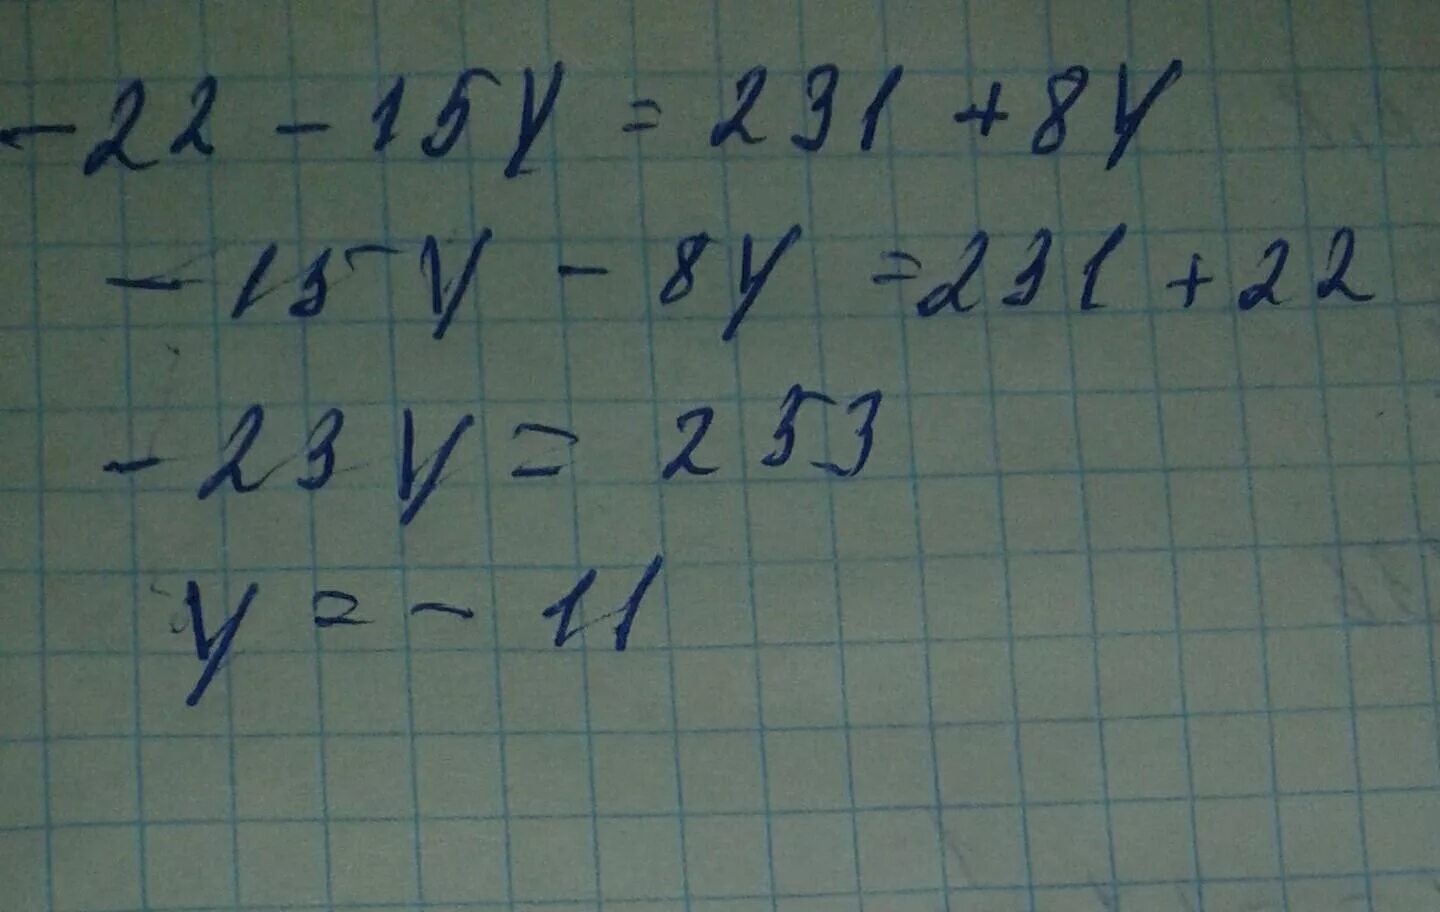 10 59 1 22. 22. Решите уравнения. Решение уравнения 22x+x-10 59. Решение уравнения 22х-х-10=59. Решите уравнение 22х+х-10 59.